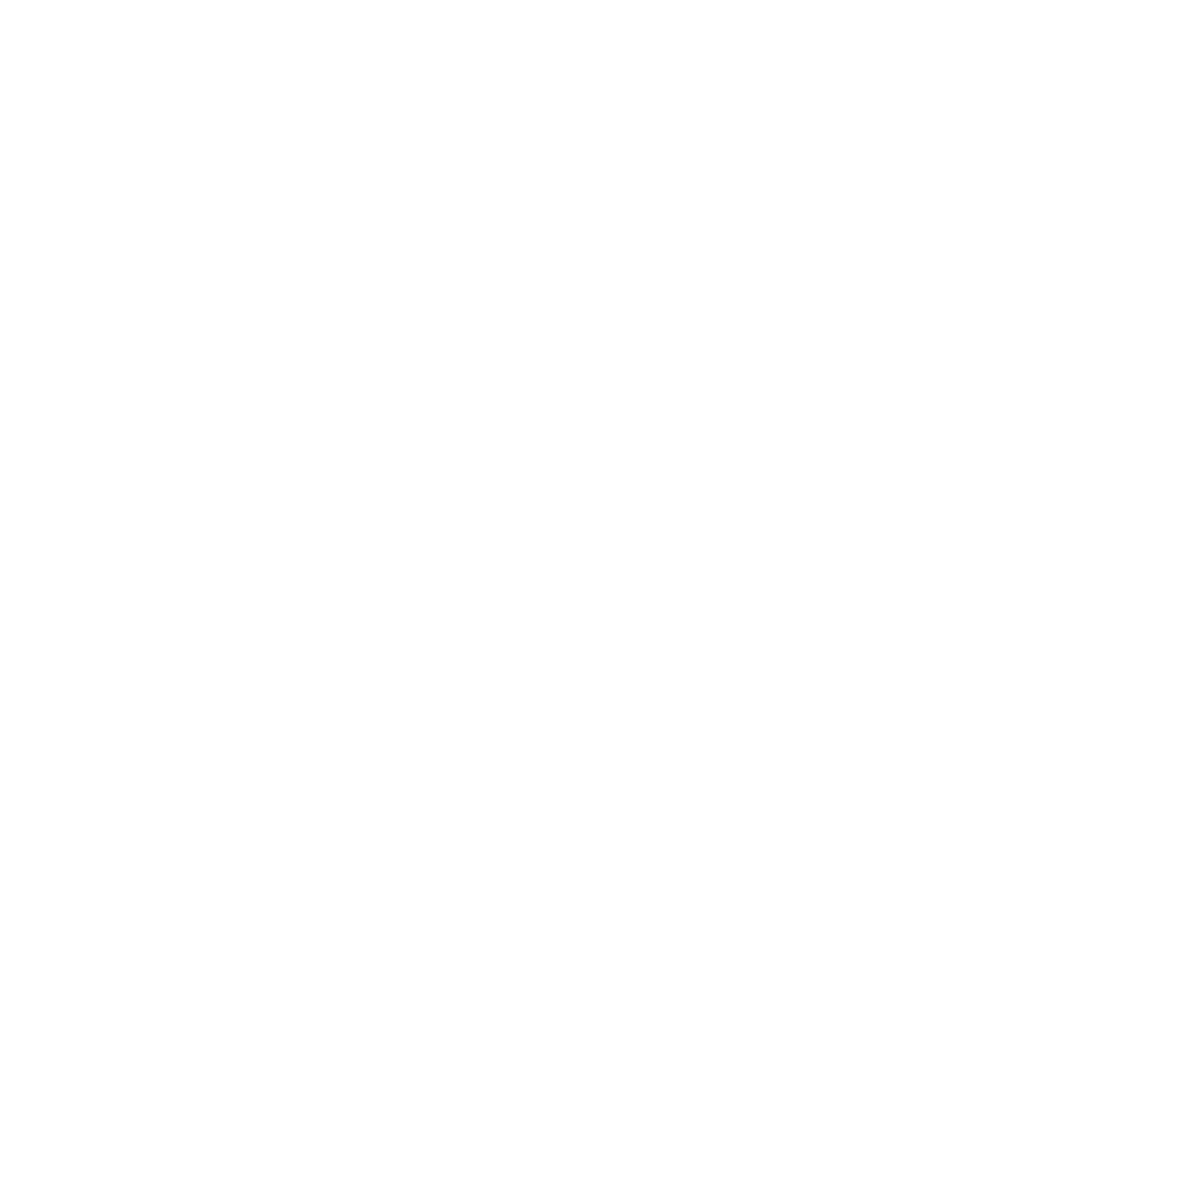 Mountain View church of Christ